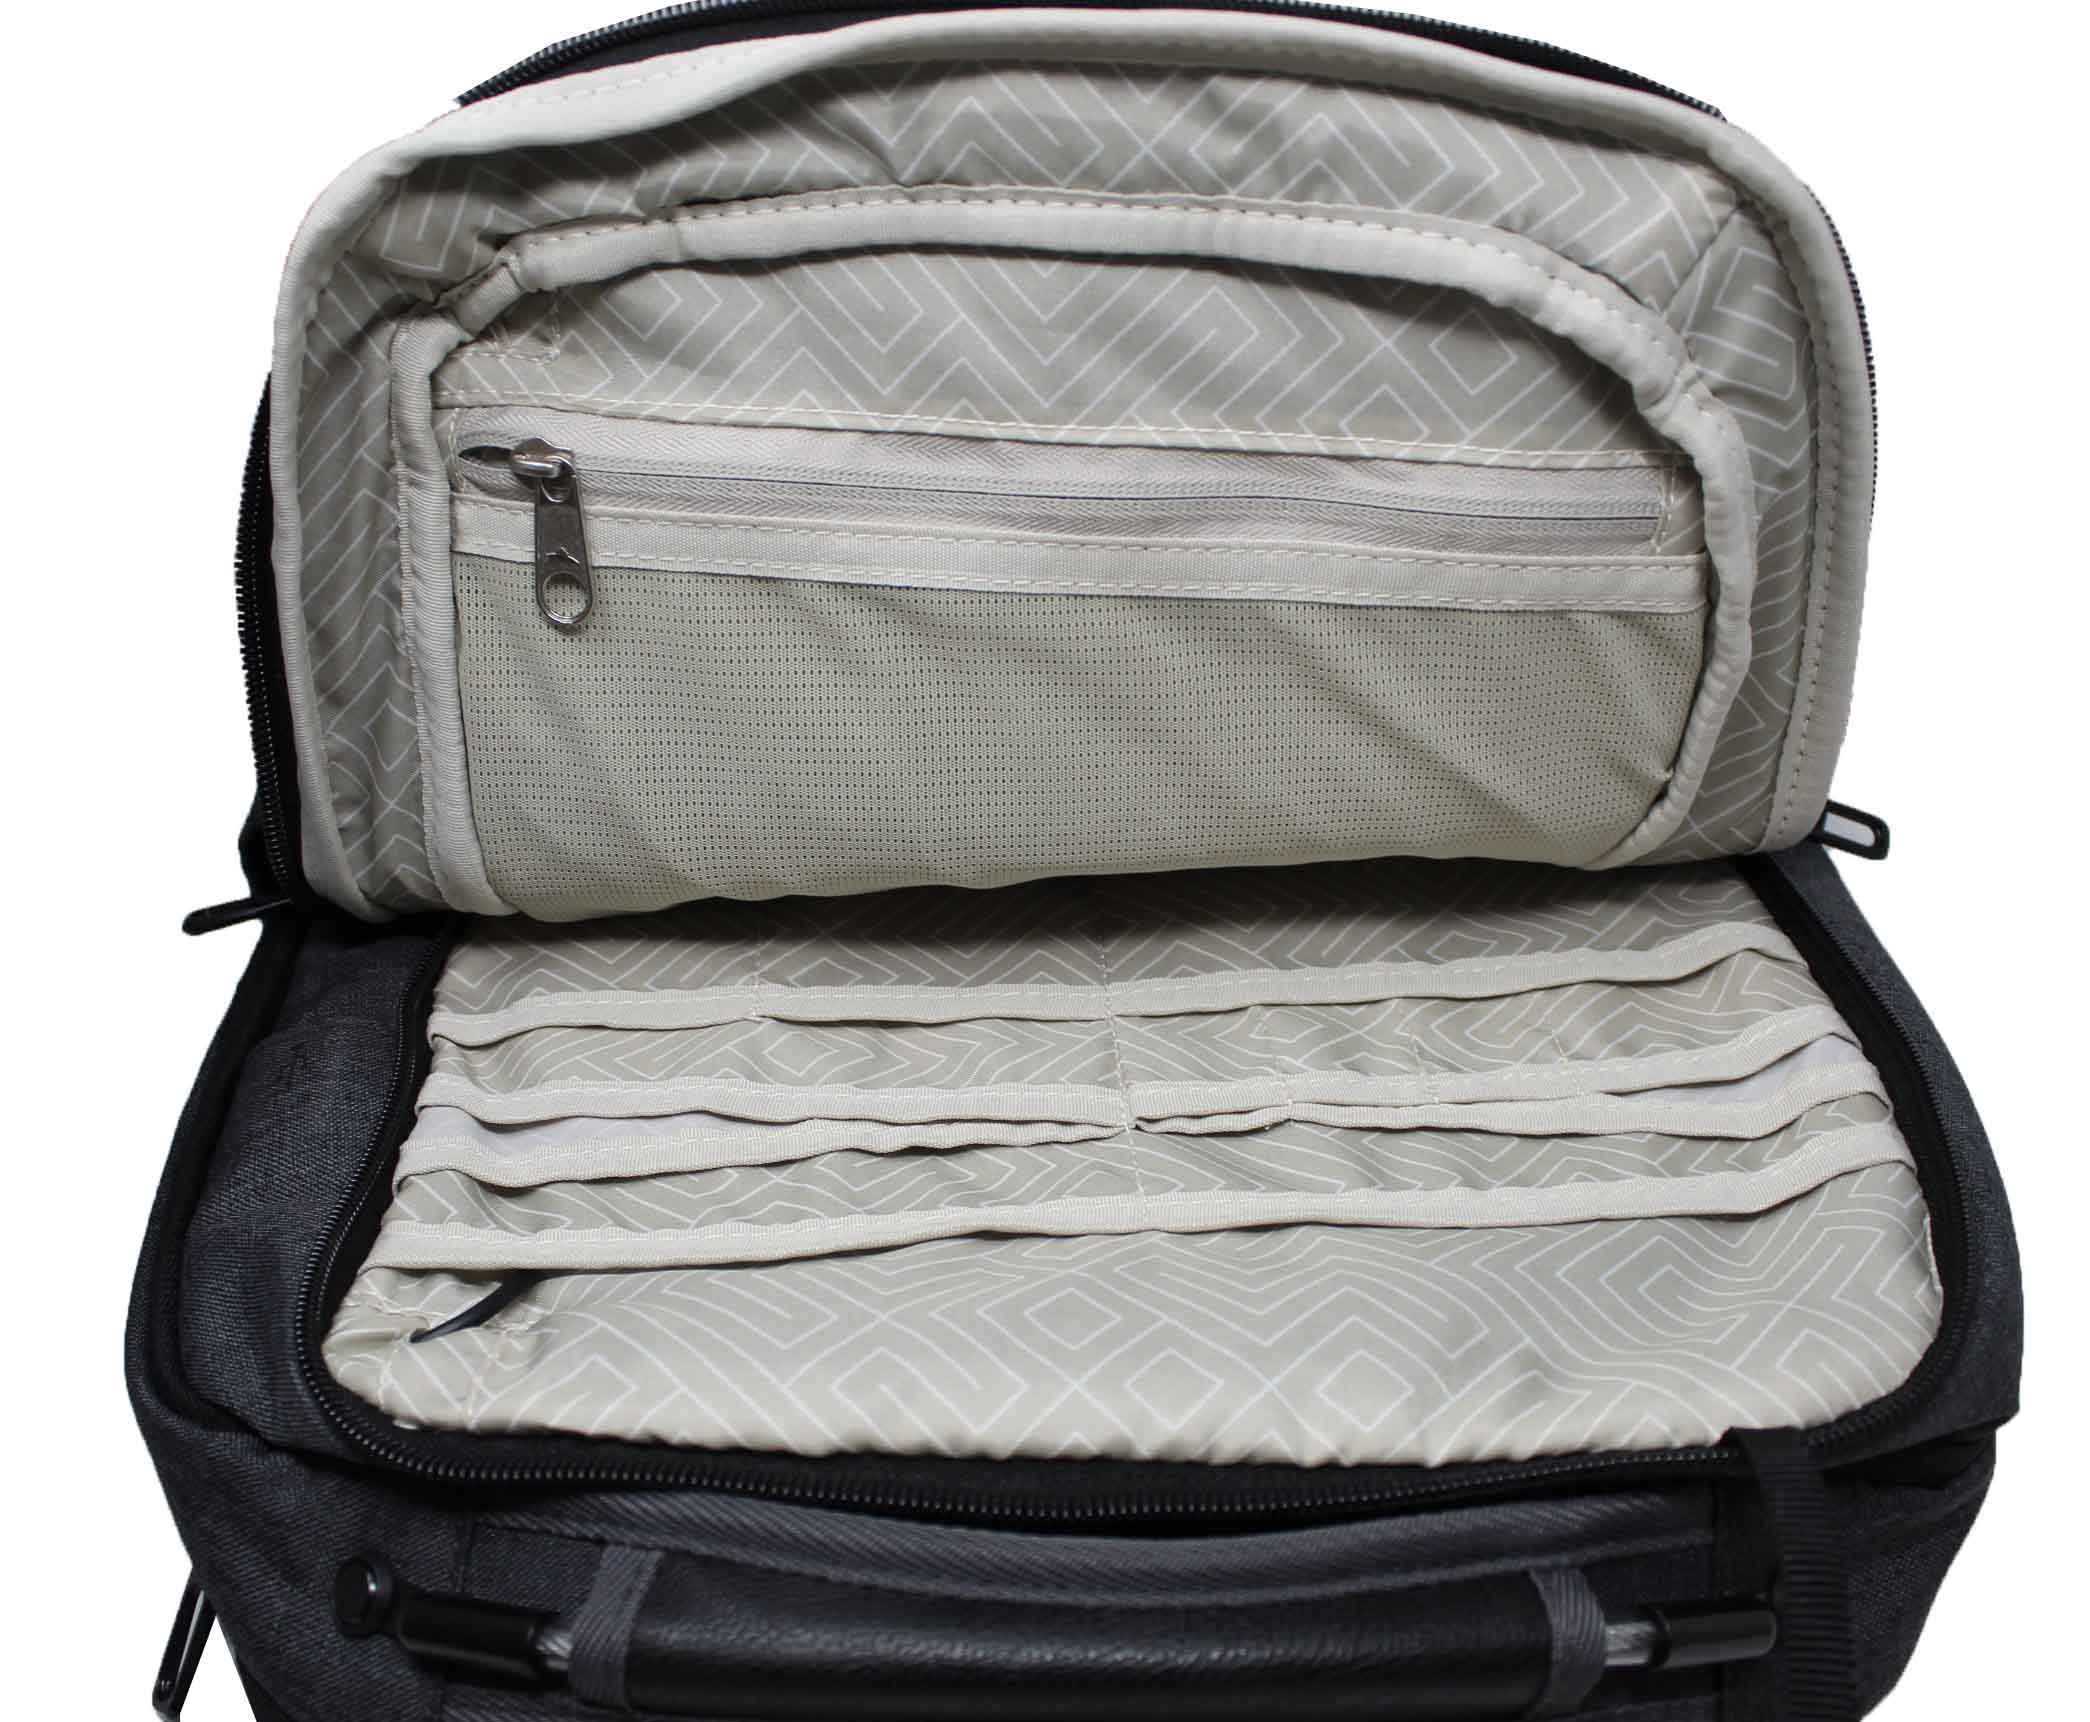 High Sierra Elite Pro Business Backpack Grey 1 Count - image 2 of 3